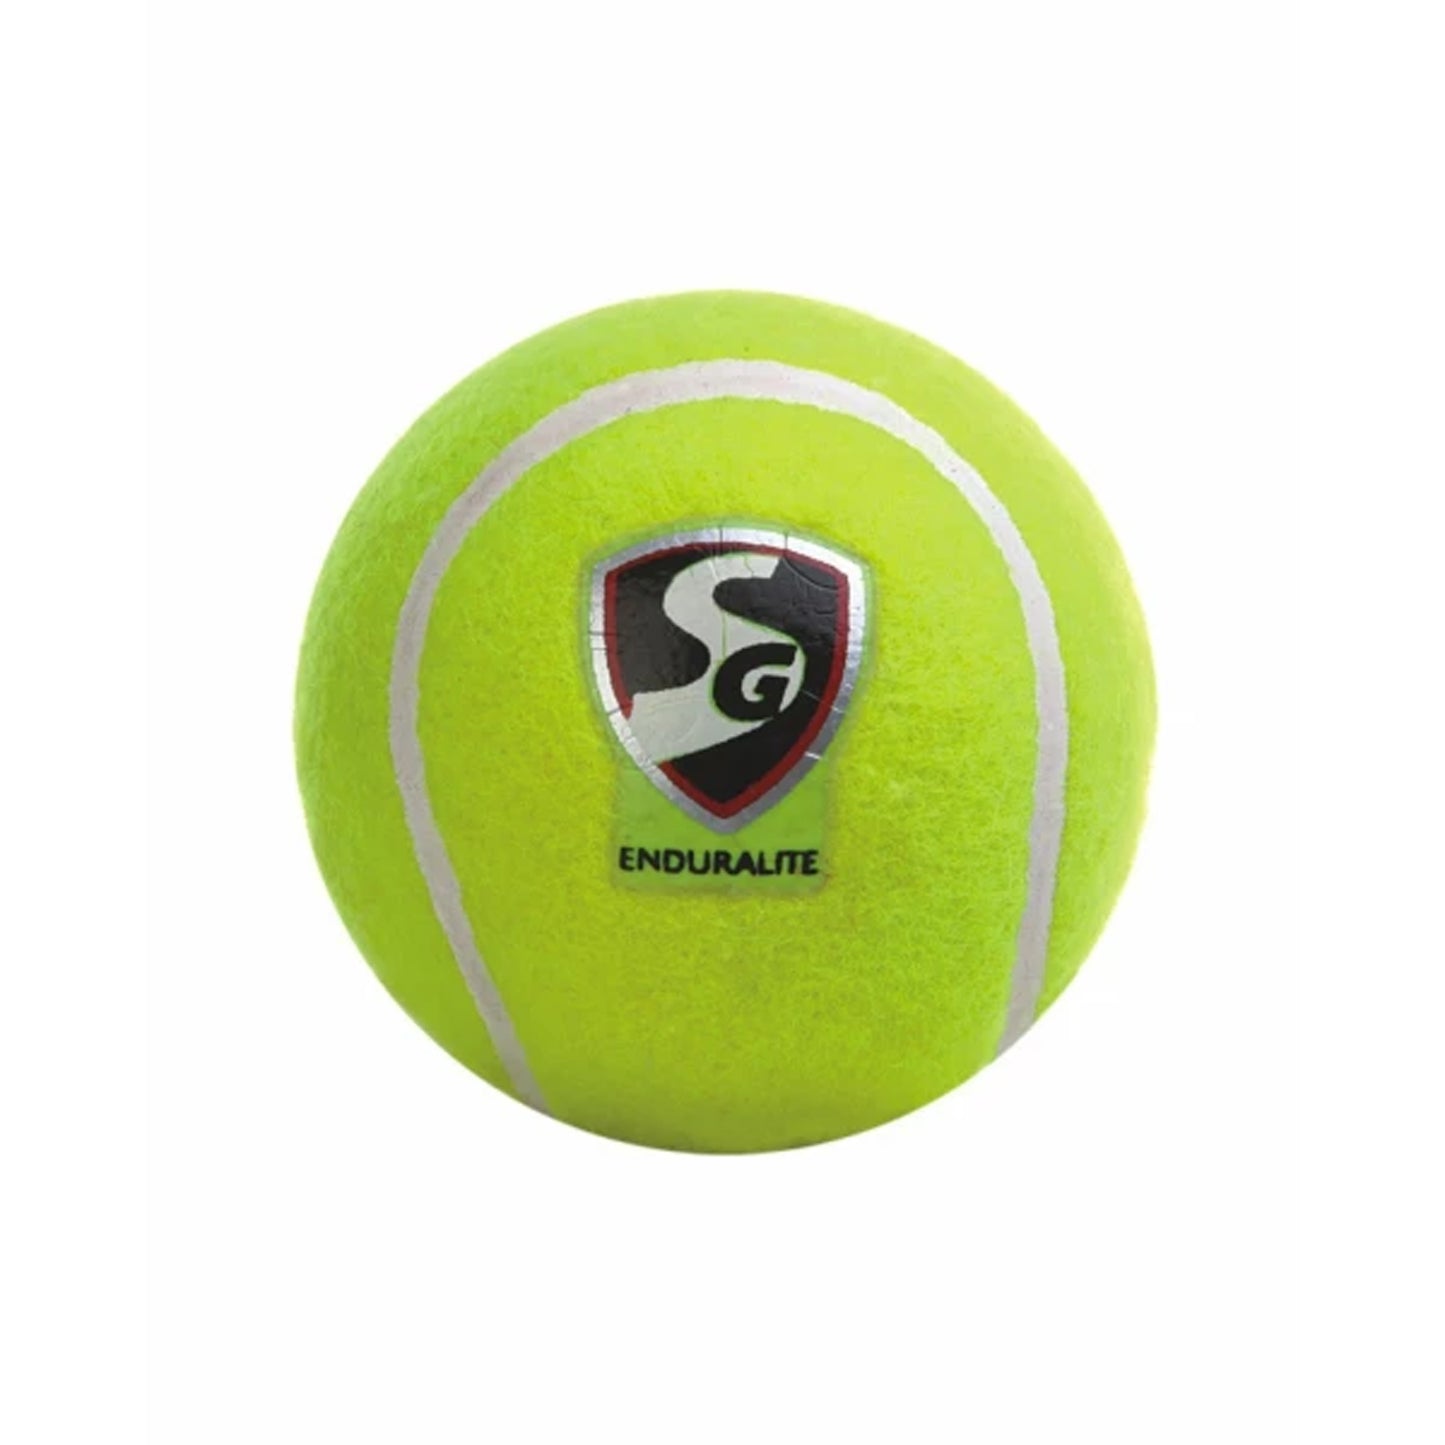 SG Enduralite Cricket Tennis Ball, 1Pc - Yellow - Best Price online Prokicksports.com